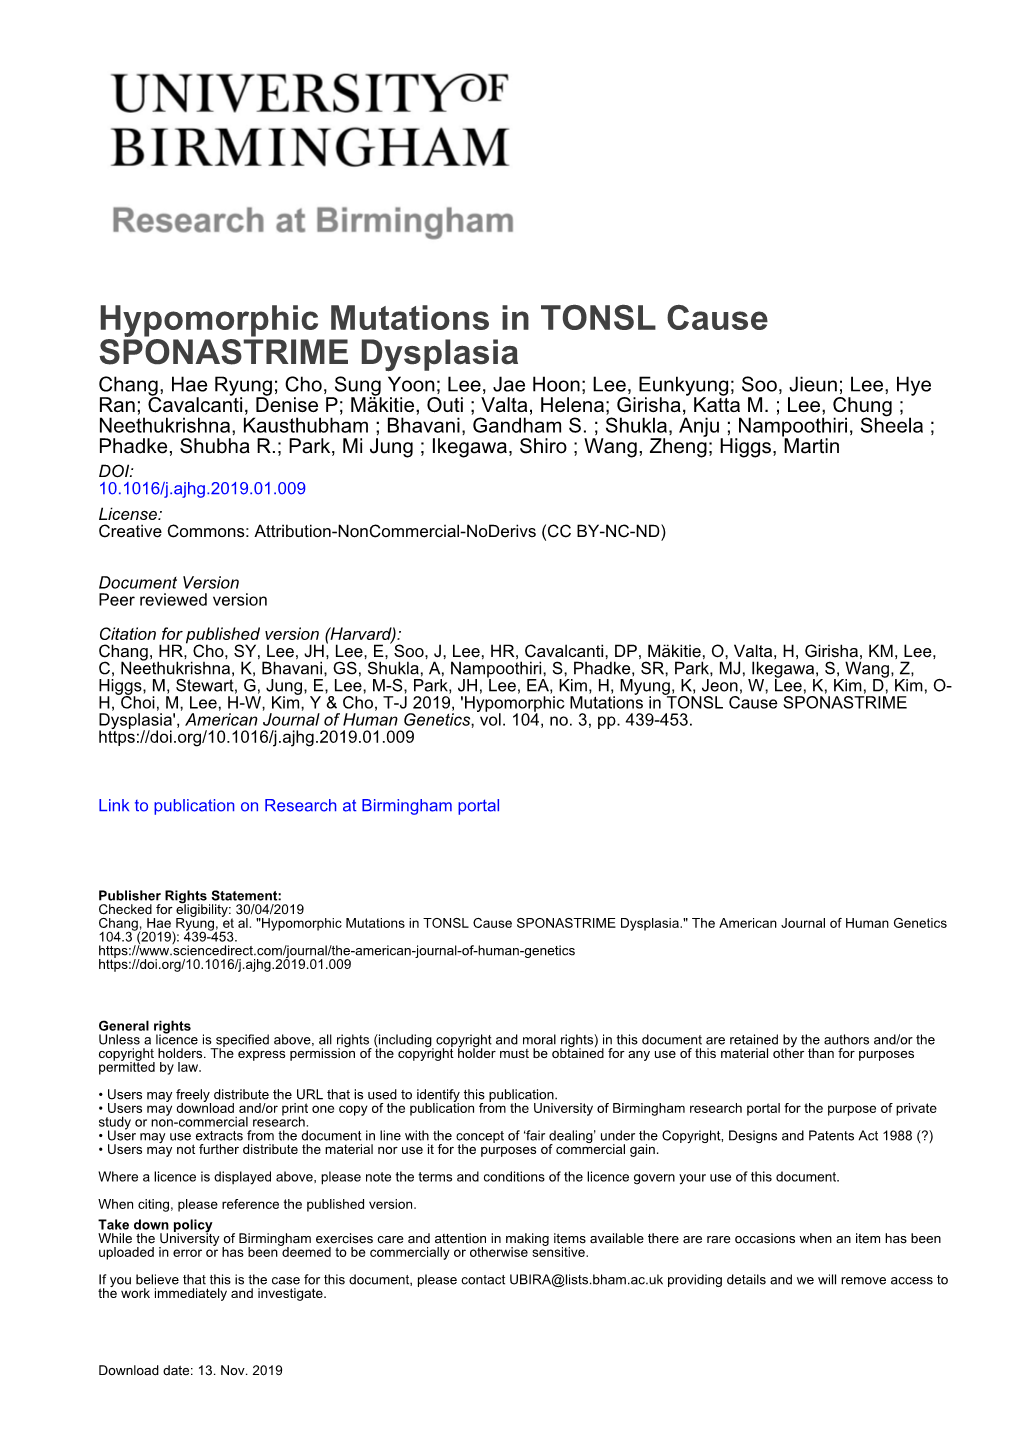 Hypomorphic Mutations in TONSL Cause SPONASTRIME Dysplasia